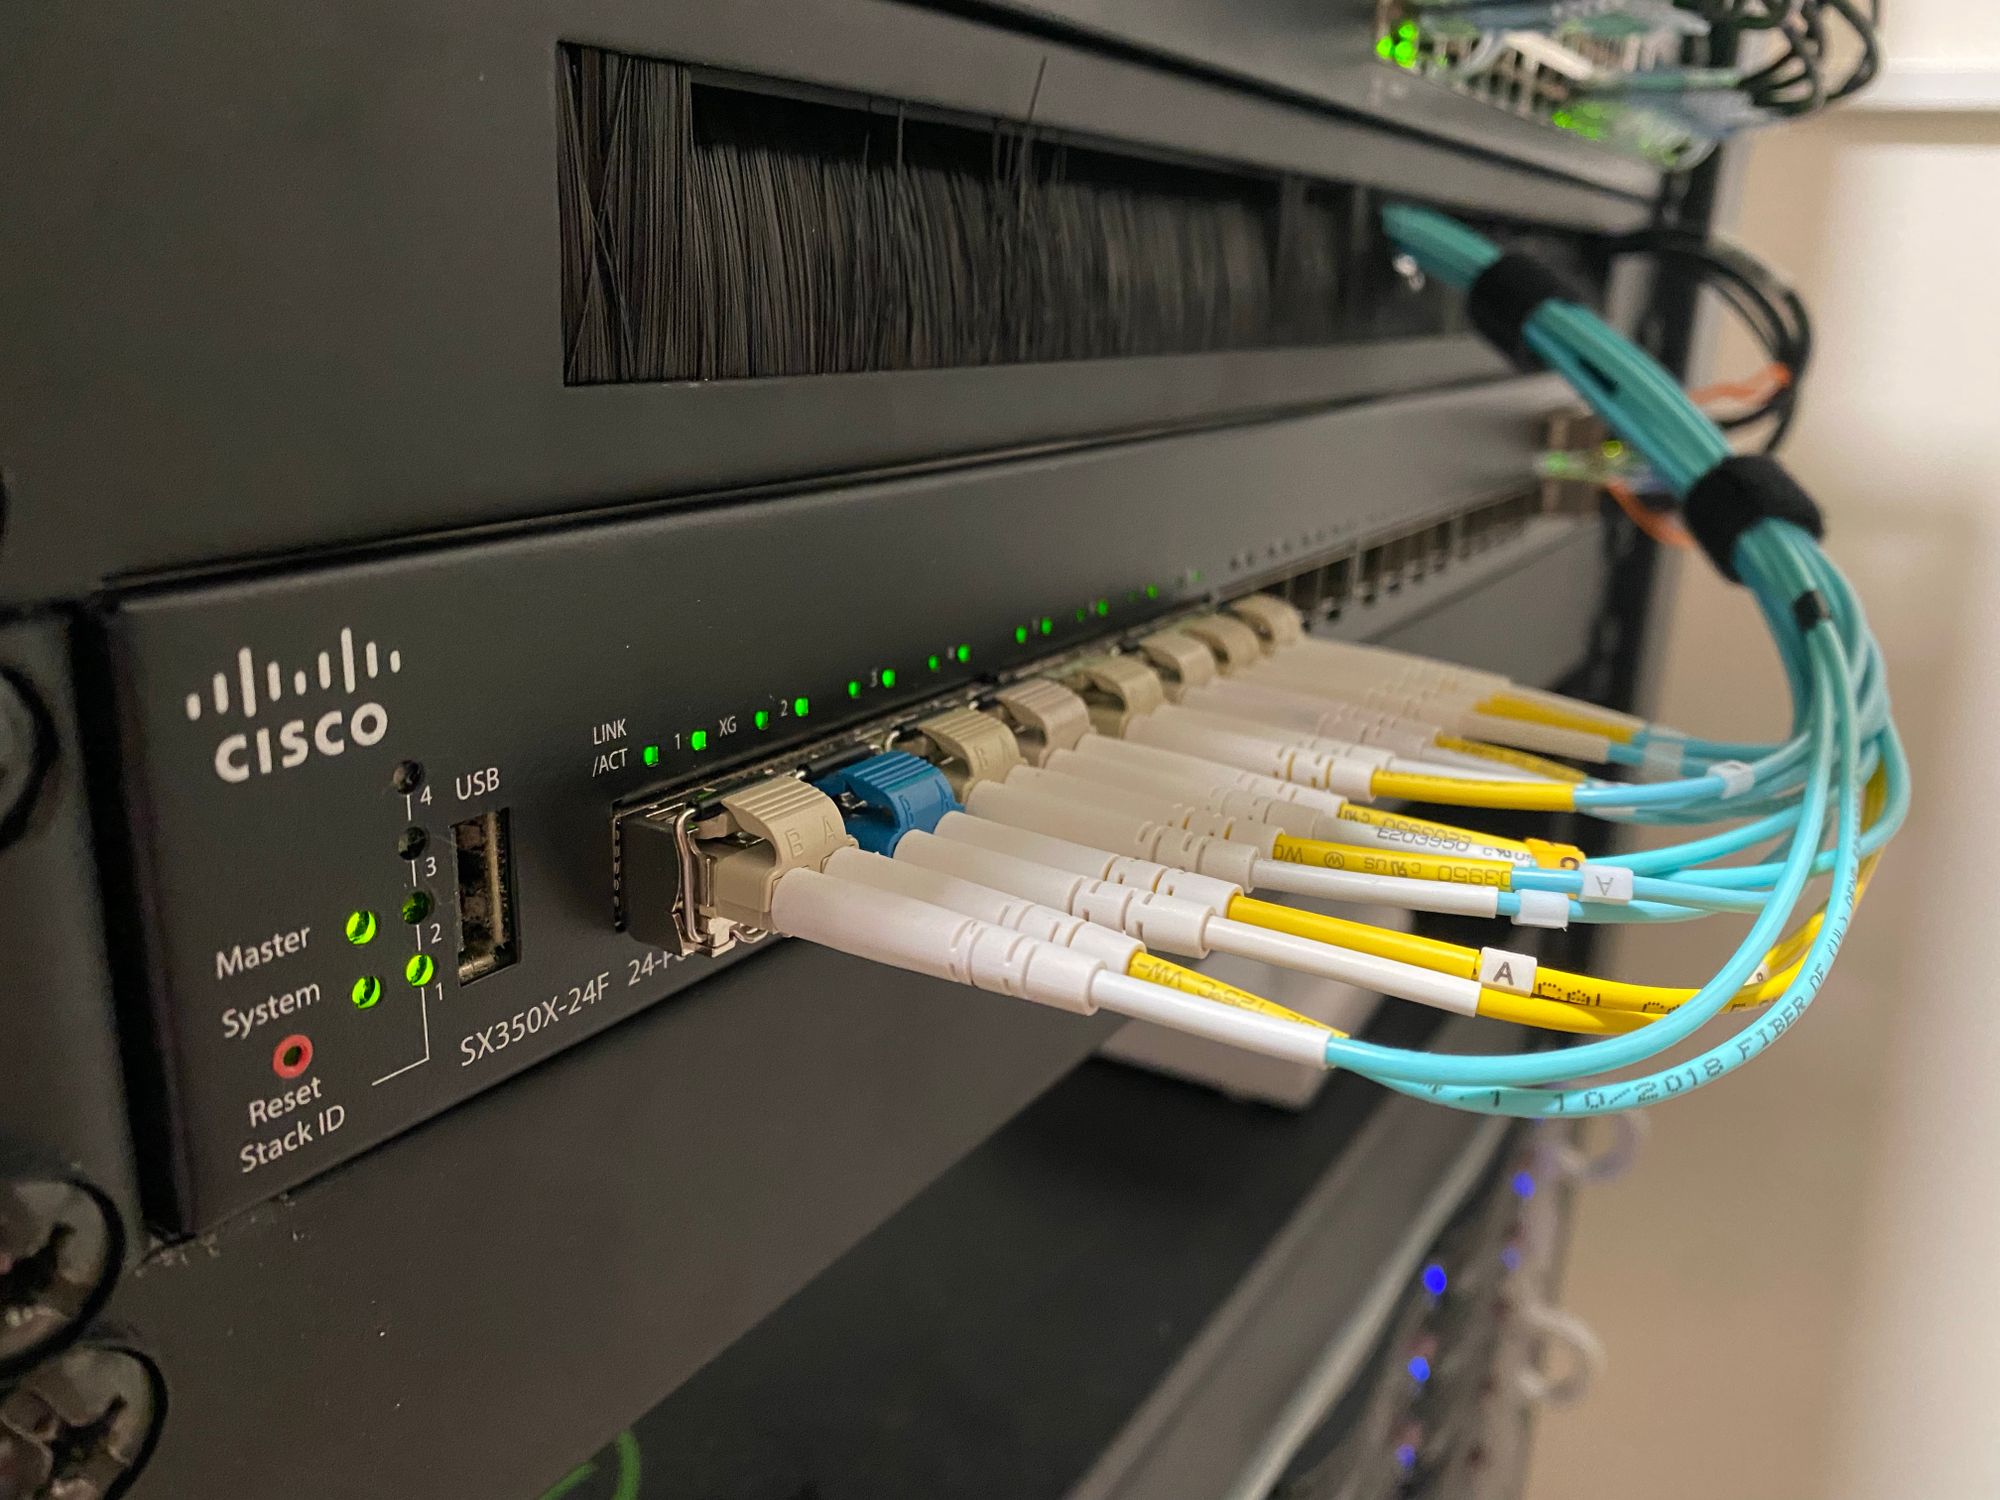 Network Upgrades - 10G Fiber, 5G WAN Failover, new switches